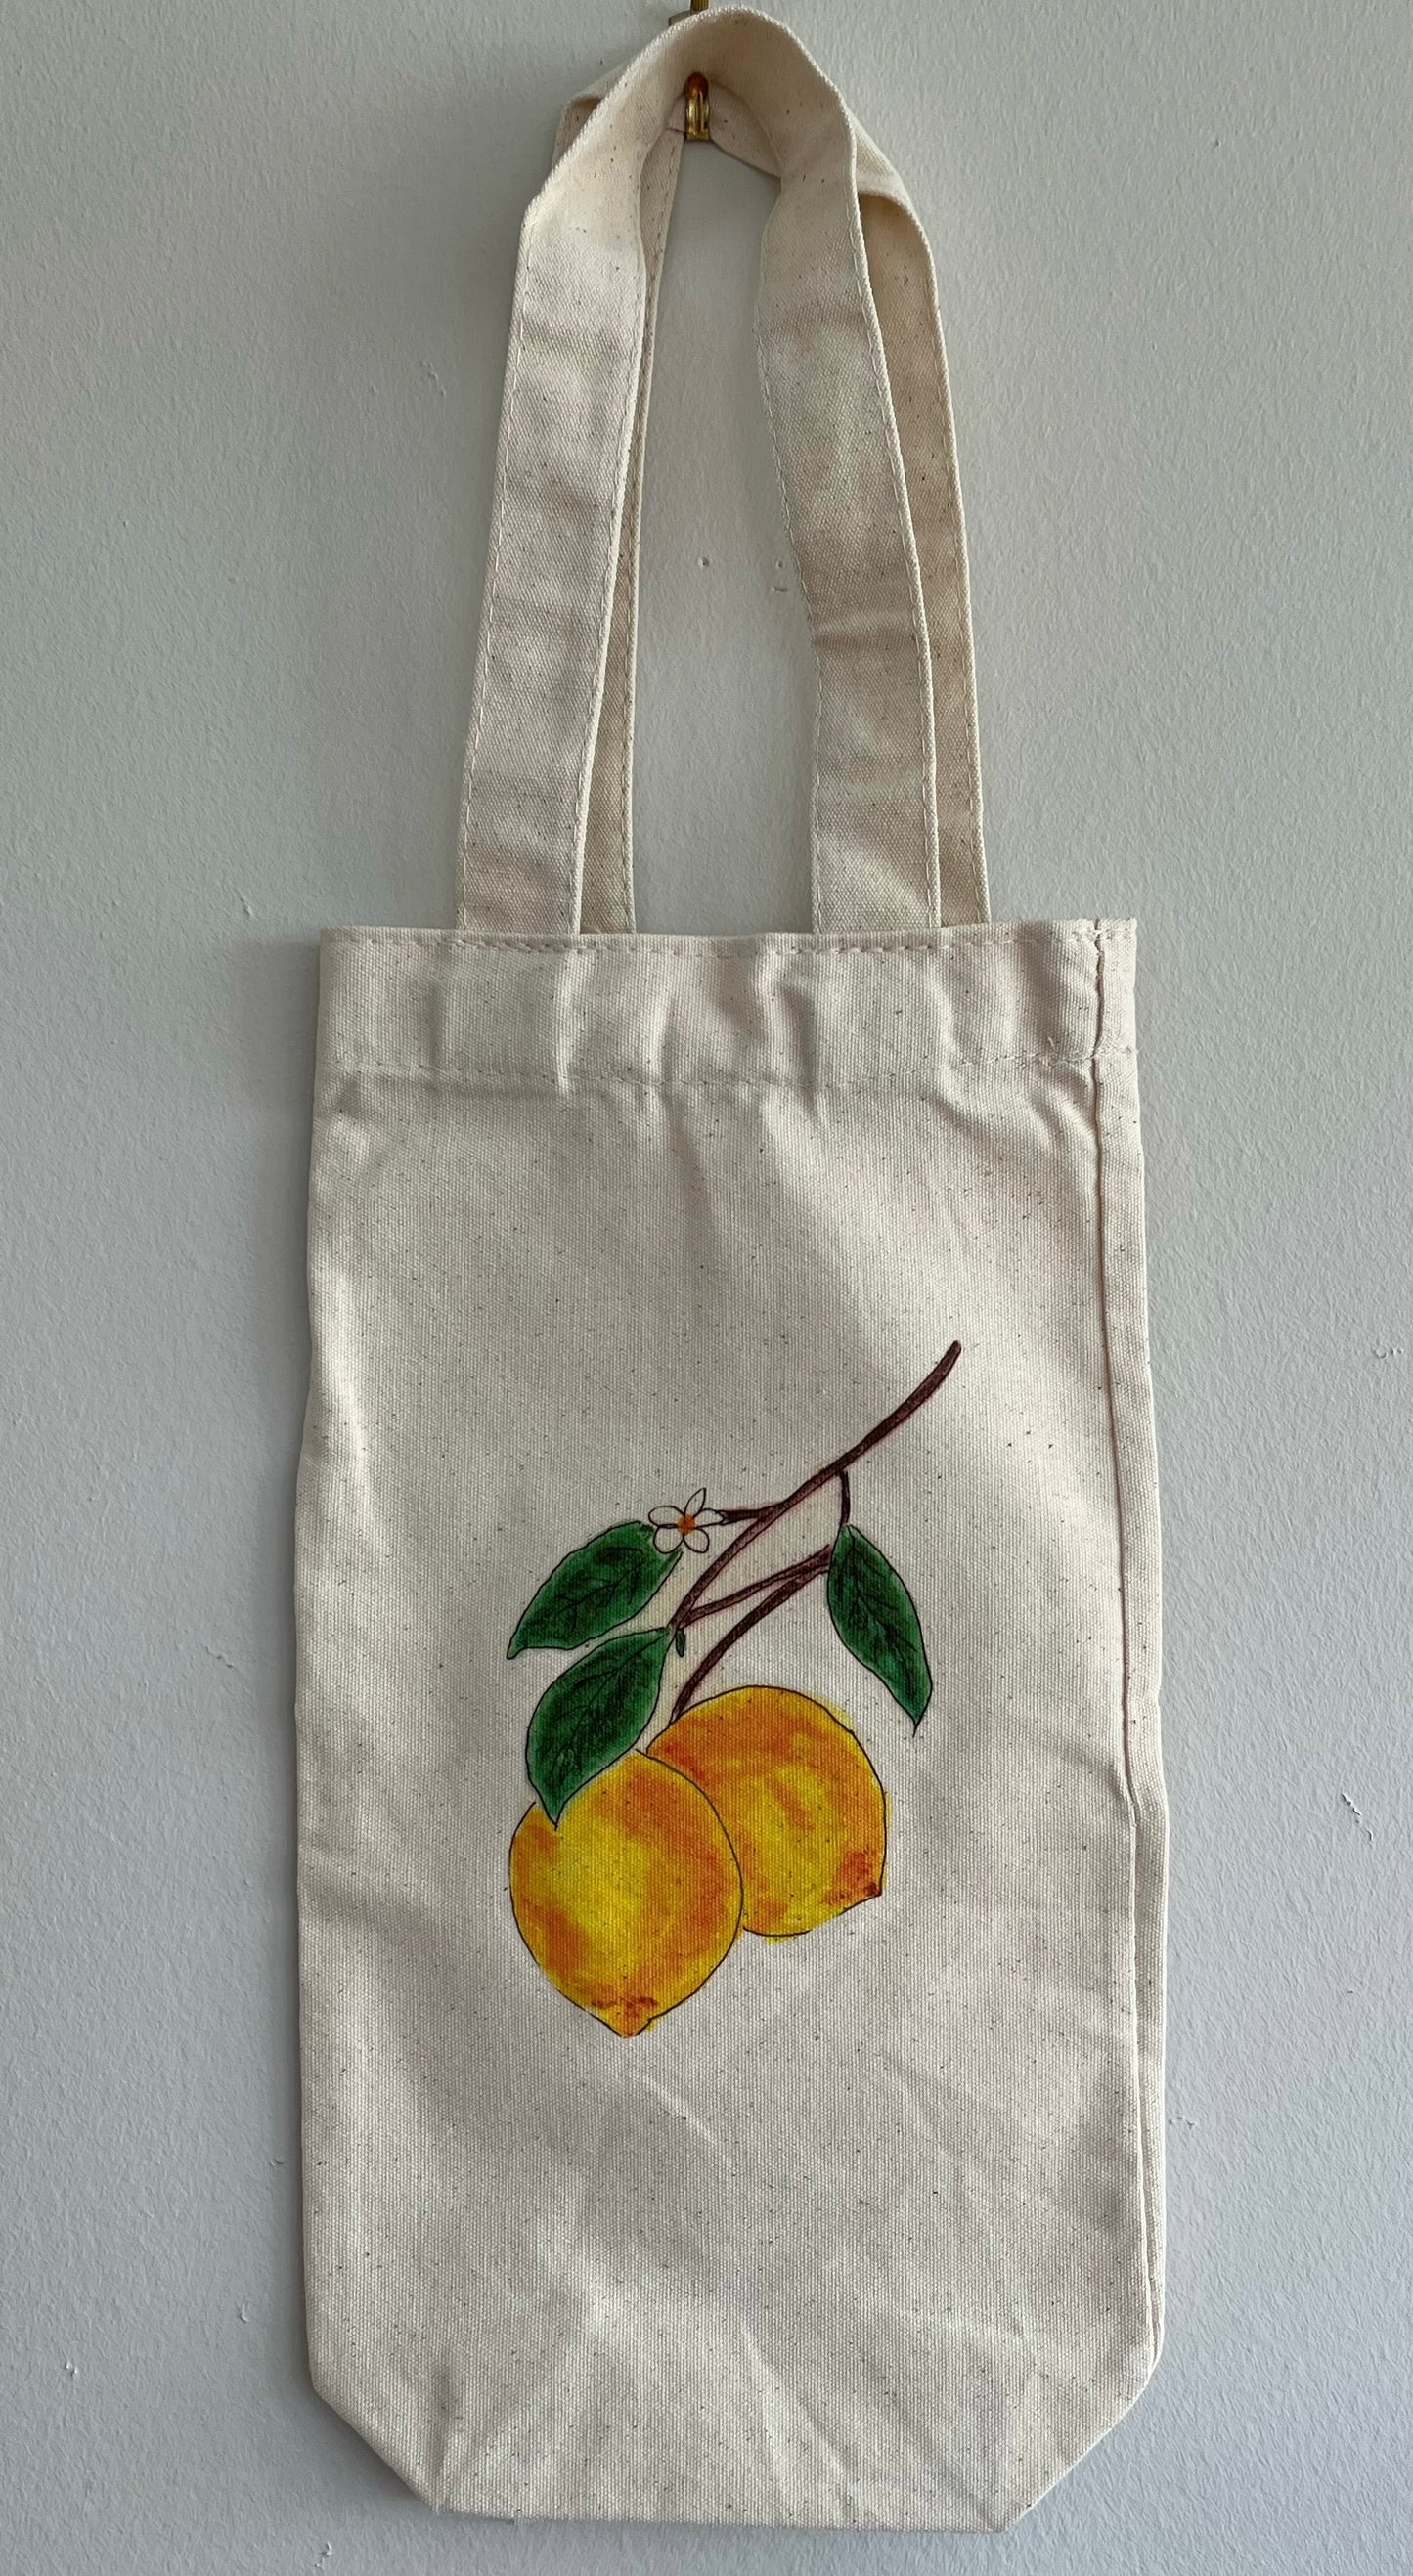 Lemon Wine Tote Bag with Gift Card